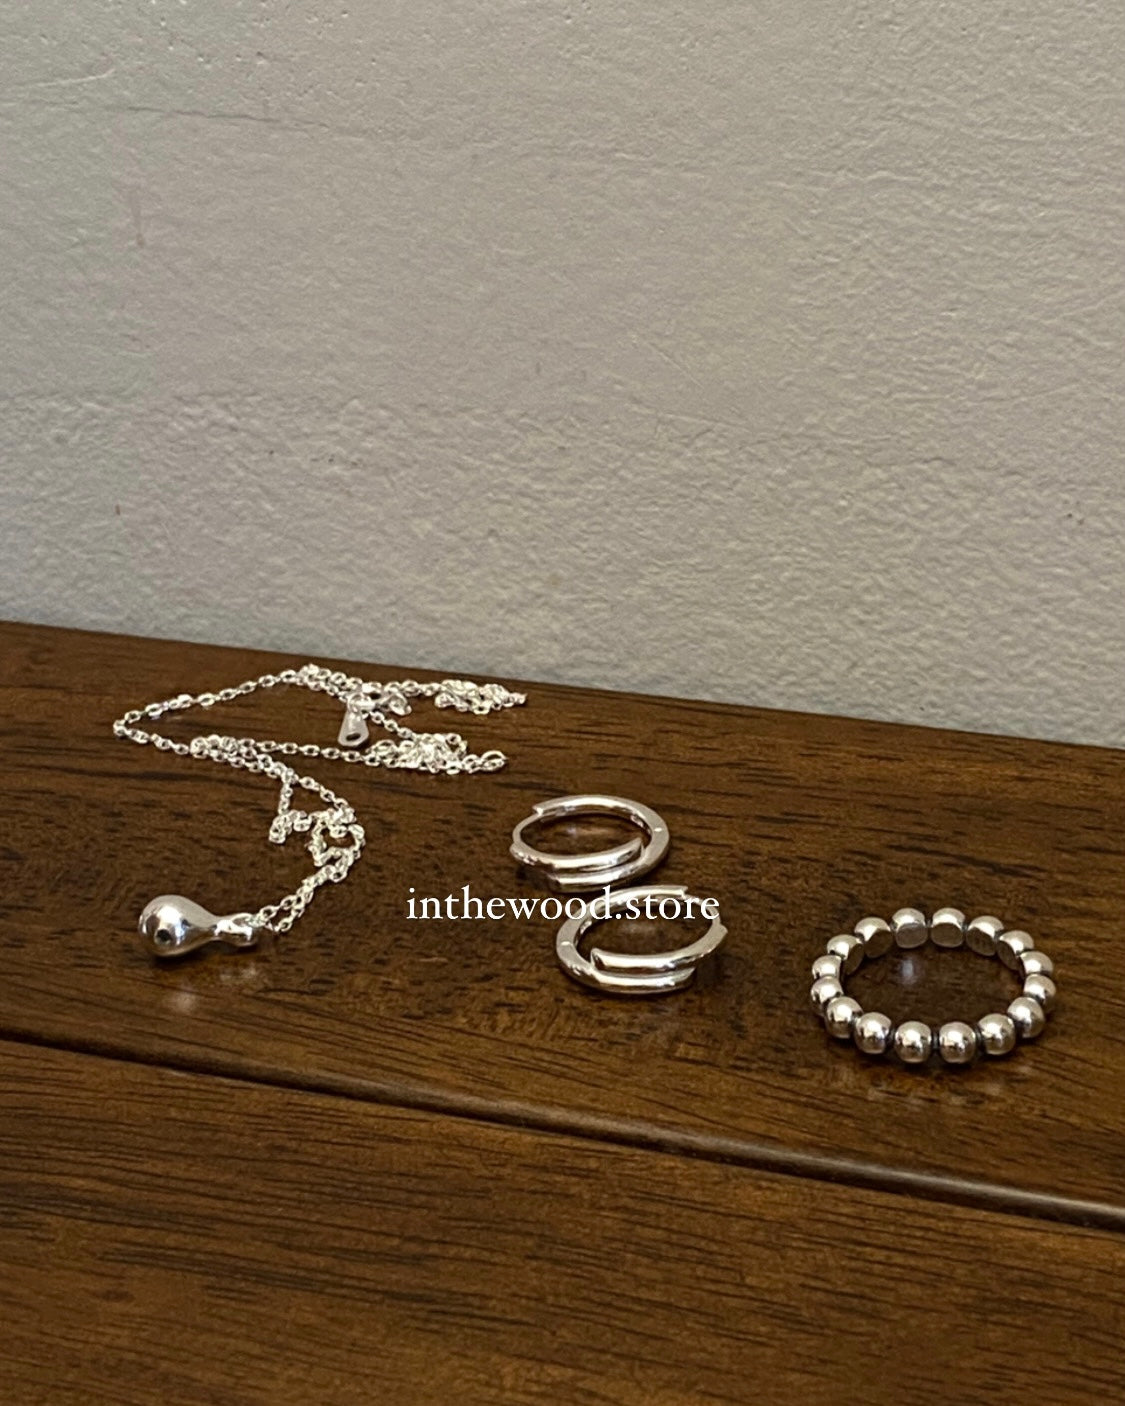 自留款🖤 [925silver] Mini Rock Ring